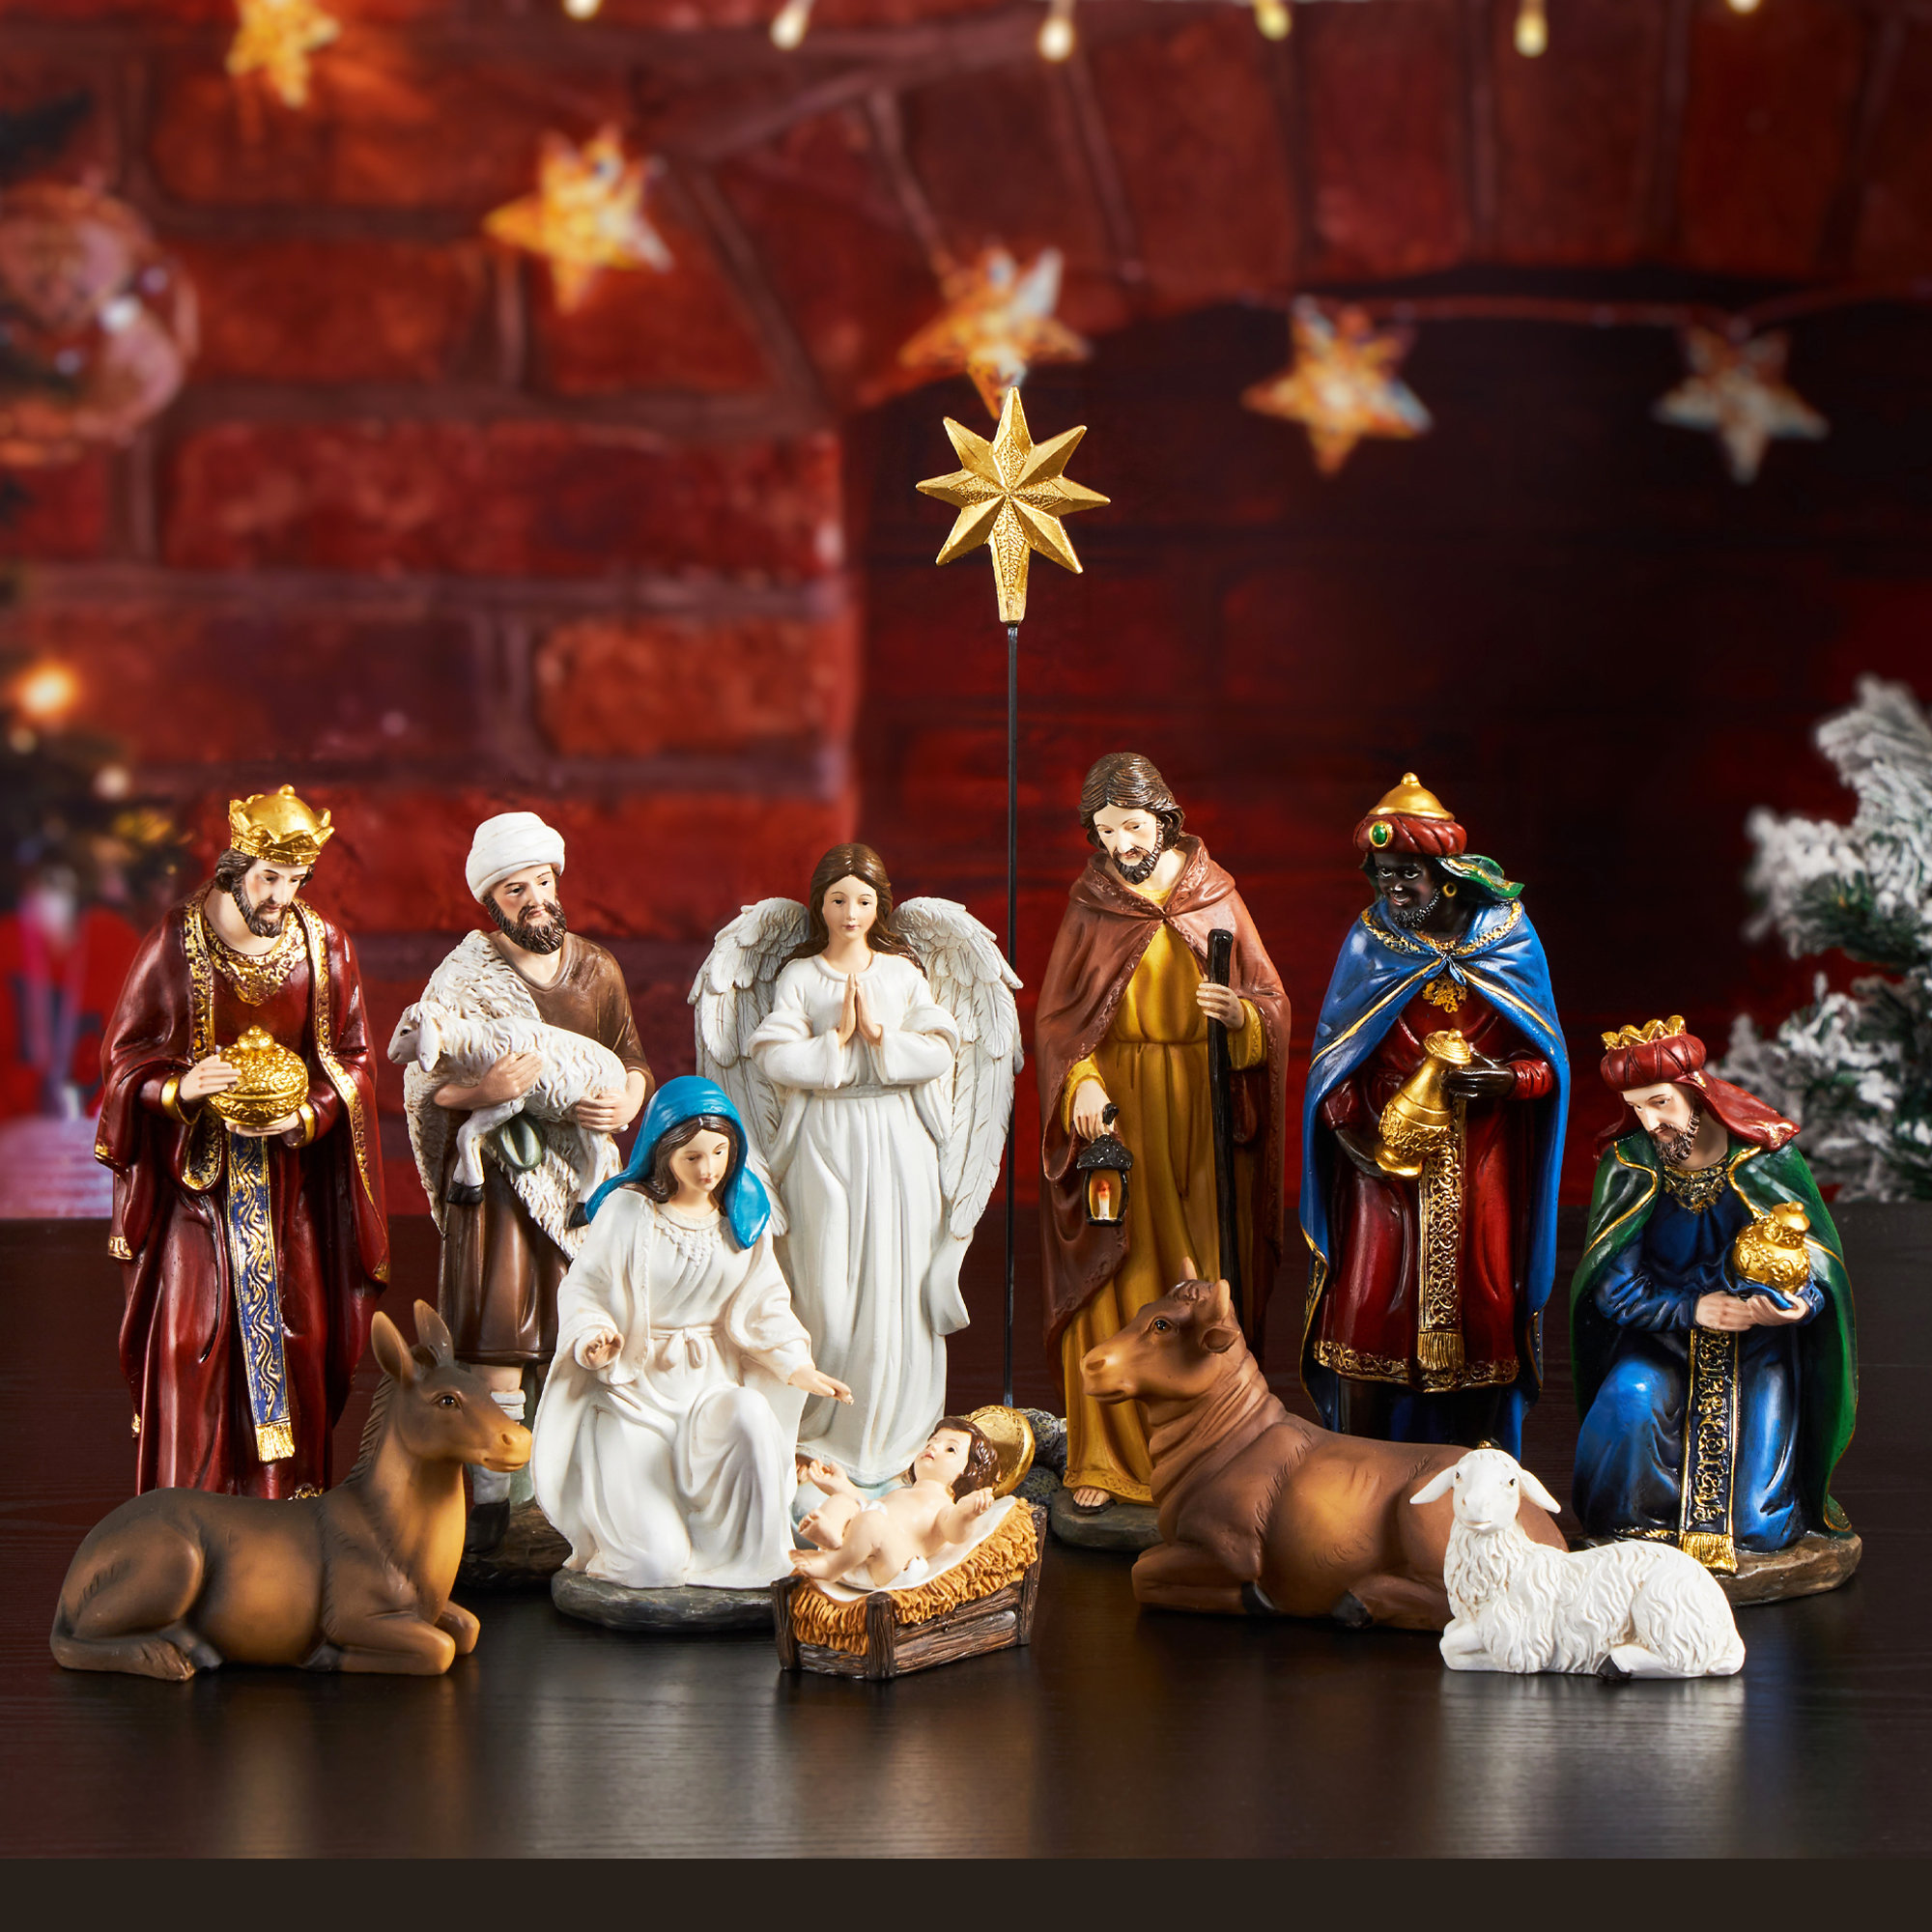 Nativity figurines Nativity scene